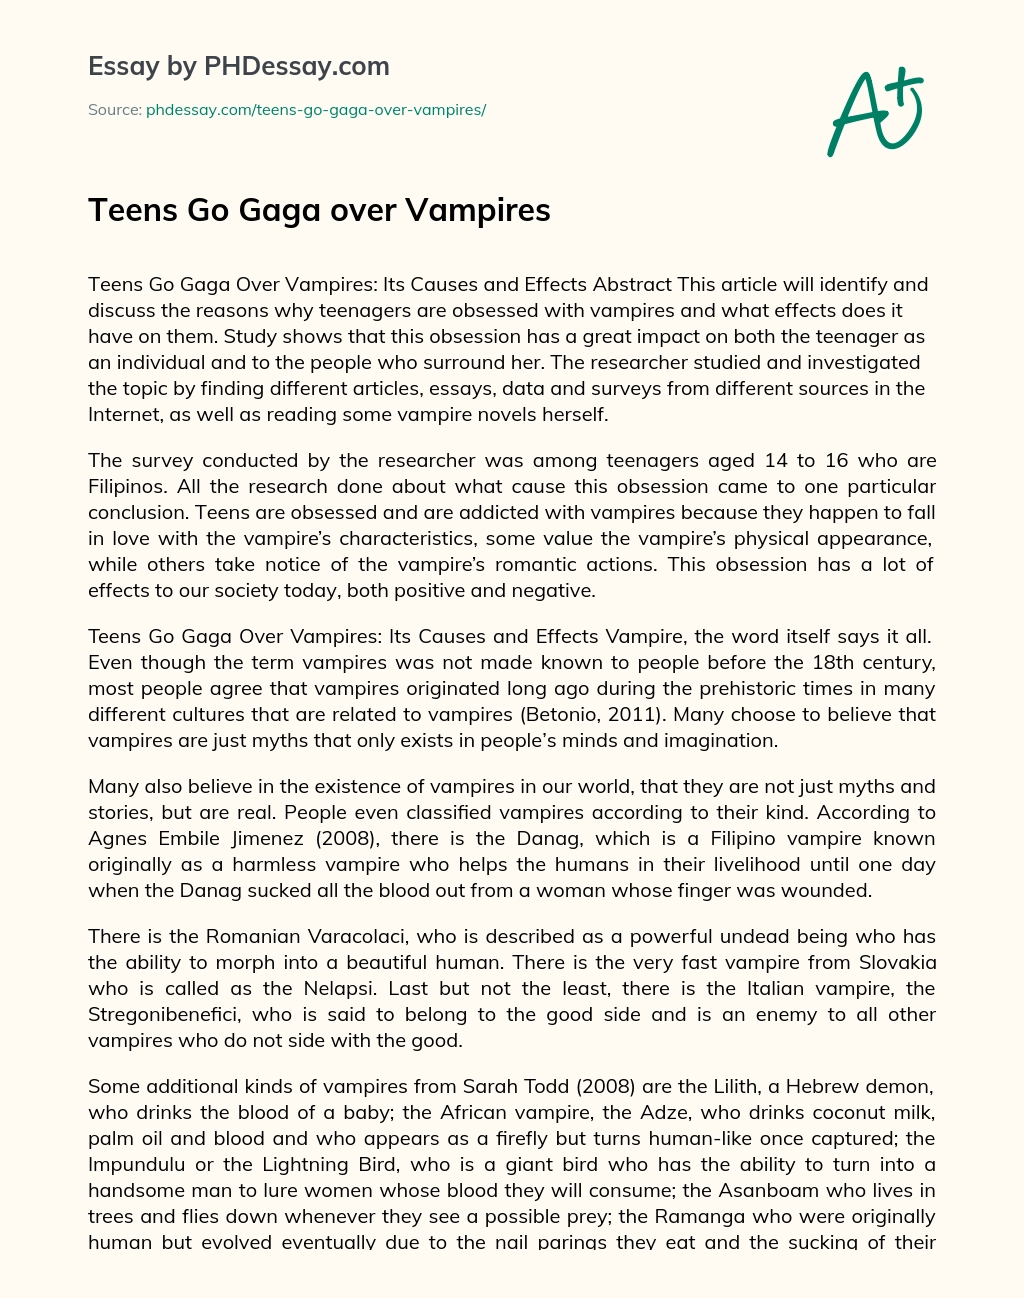 Teens Go Gaga over Vampires essay